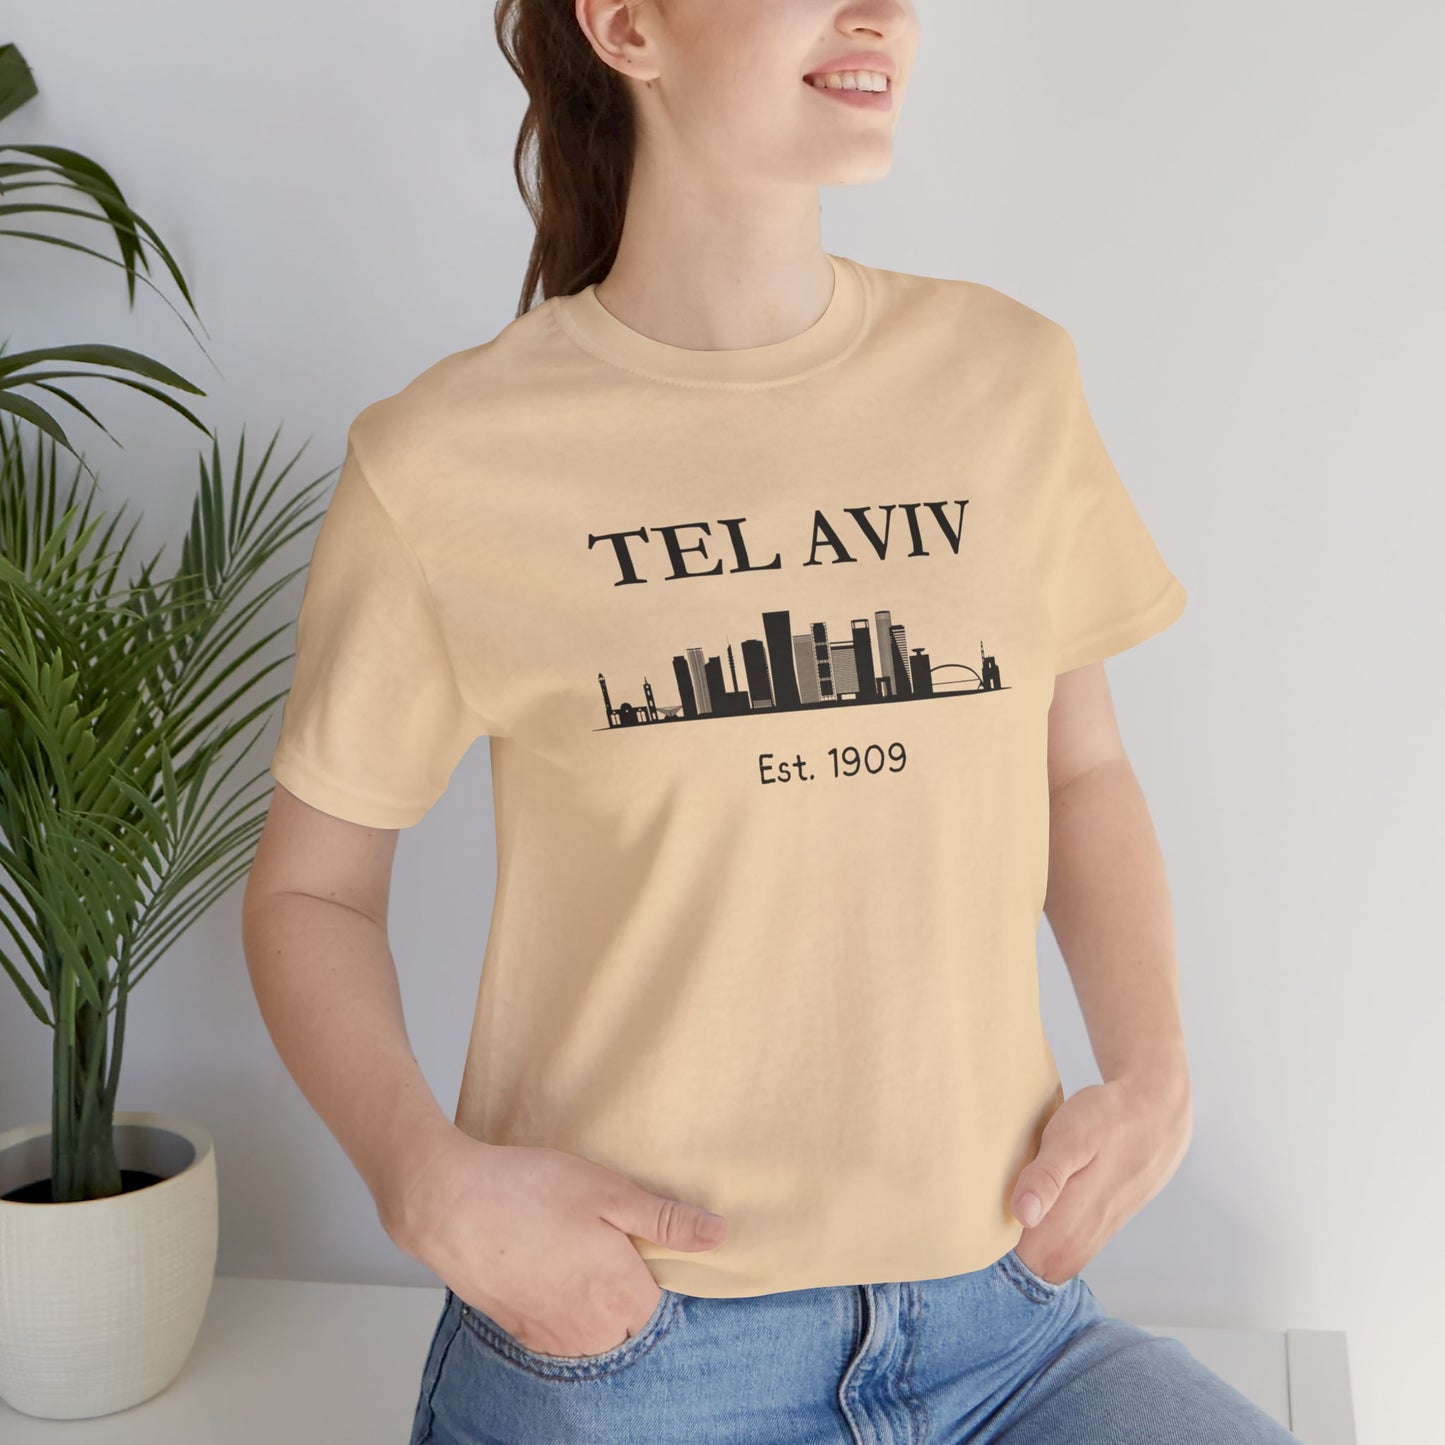 Tel Aviv Unisex t-Shirt